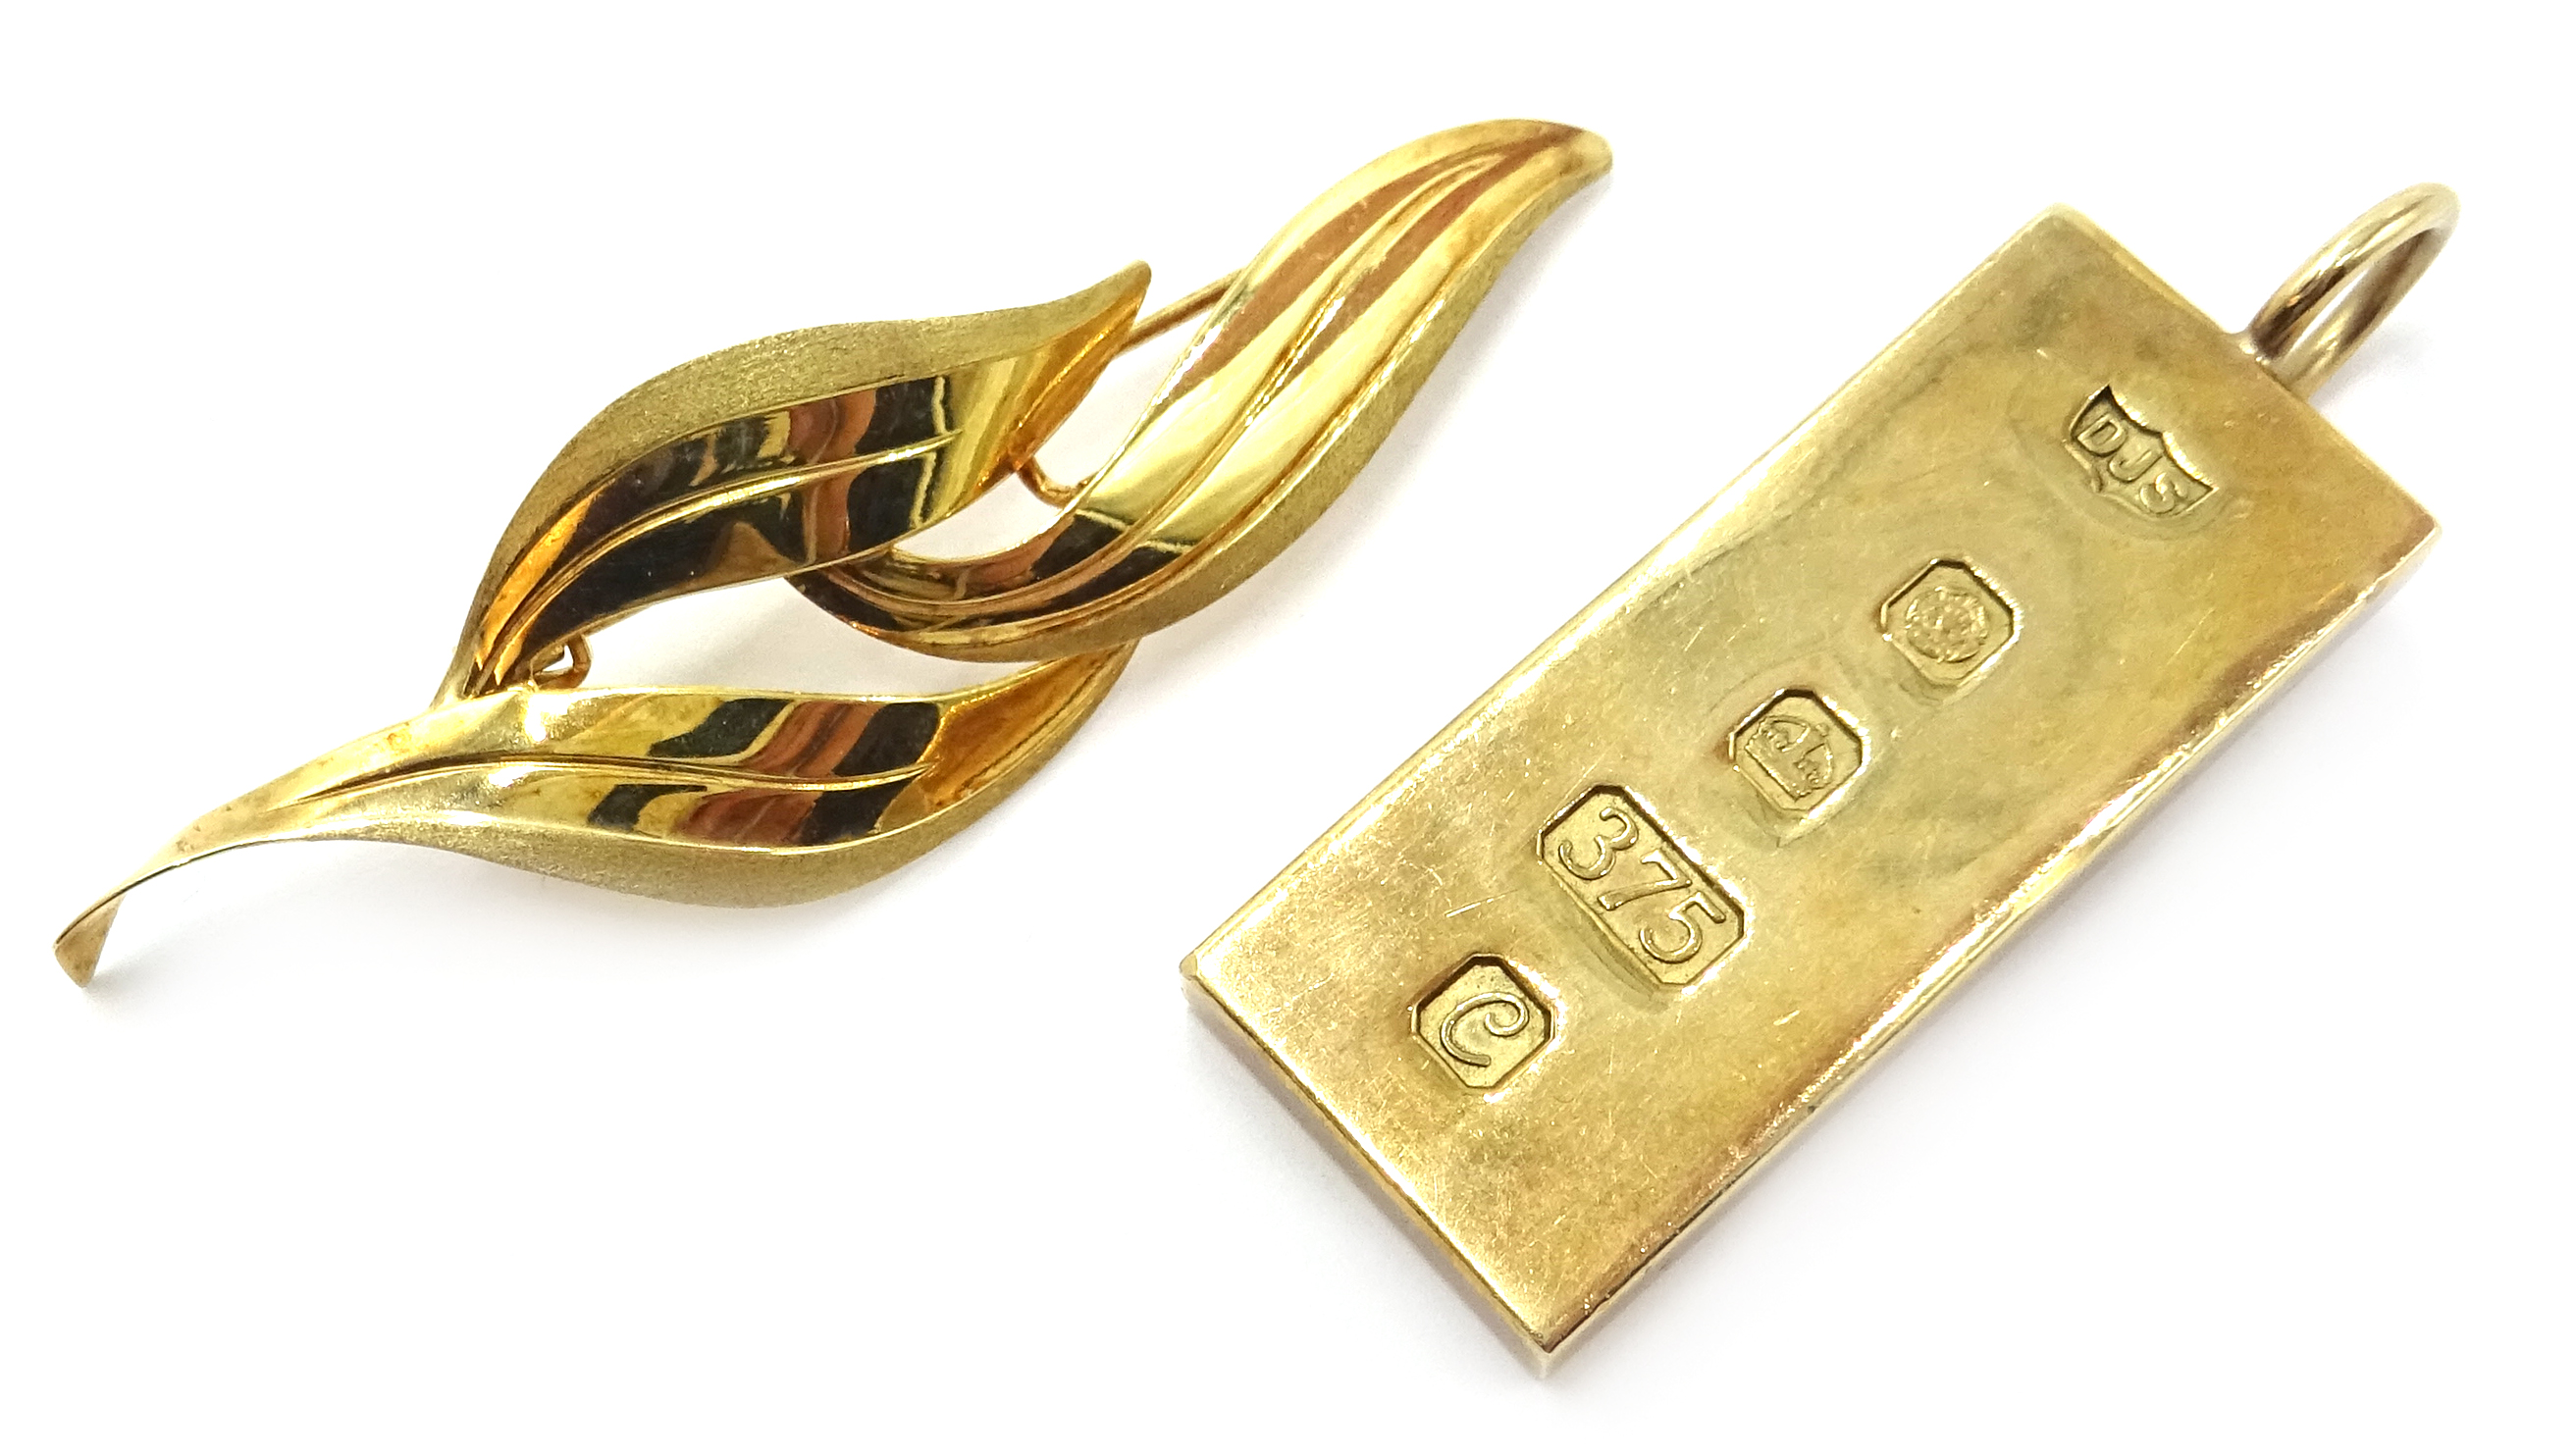 9ct gold ingot pendant hallmarked 30gm and a 9ct gold leaf brooch hallmarked 2gm